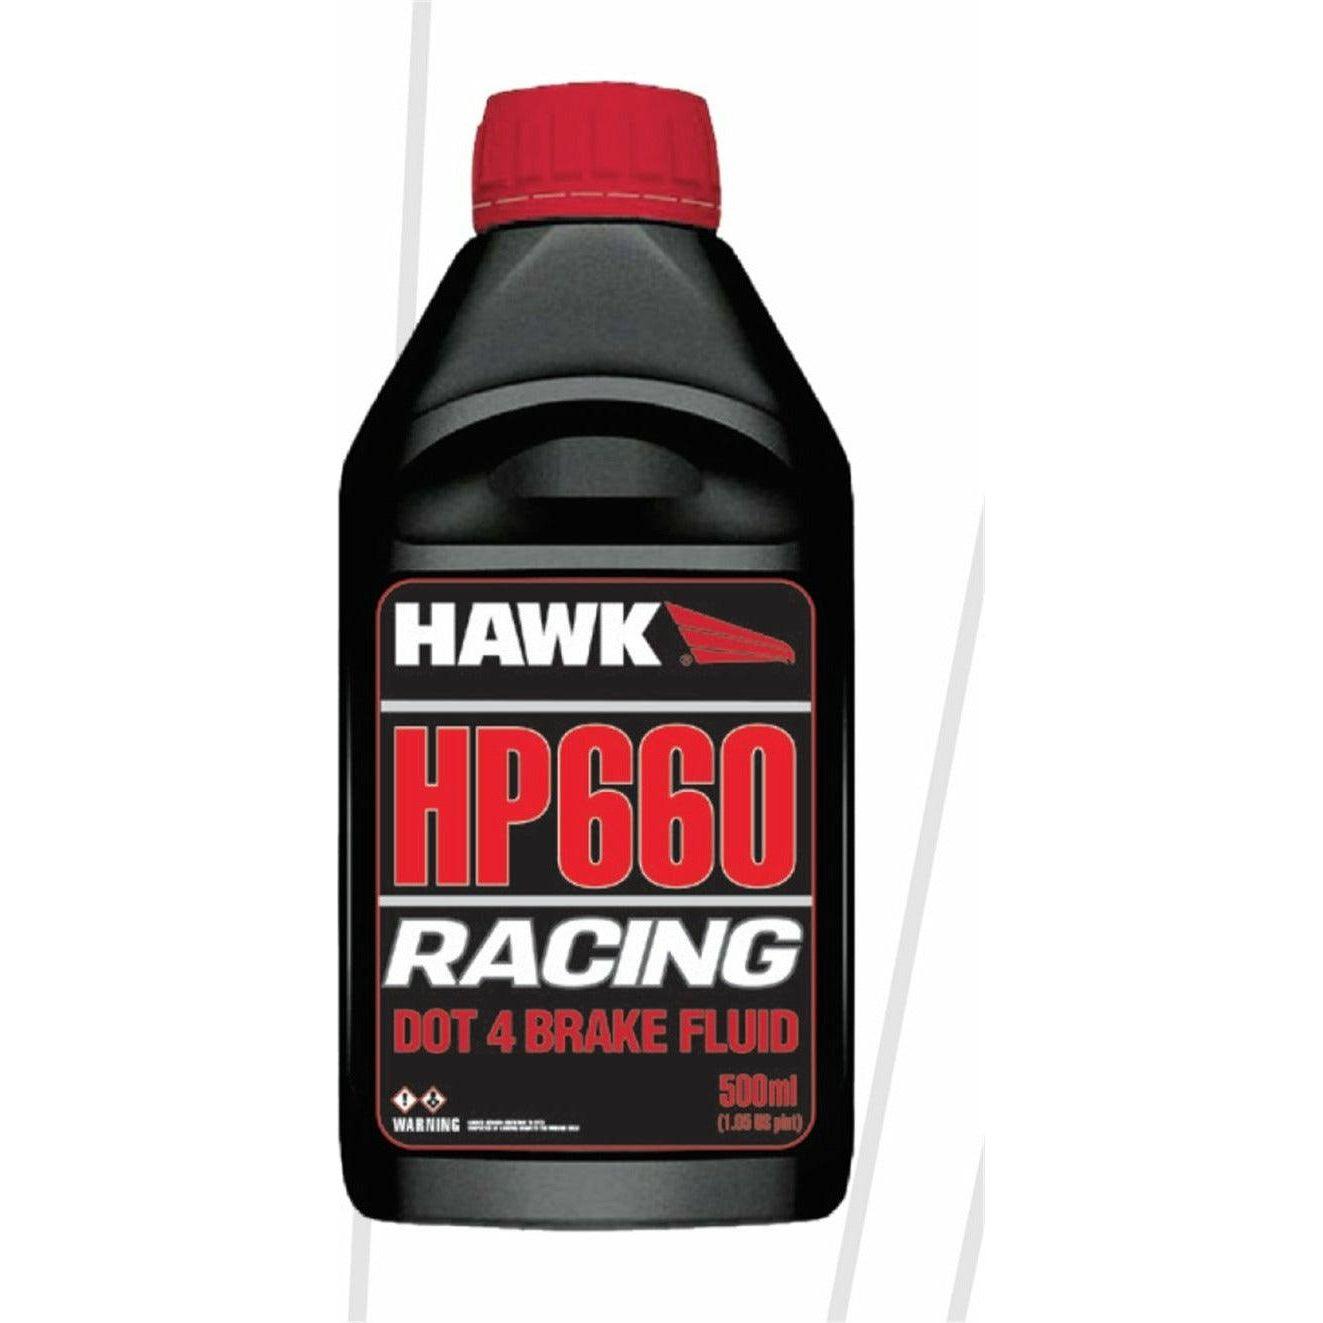 Hawk Performance Race DOT 4 Brake Fluid - 500ml Bottle - SMINKpower Performance Parts HAWKHP660 Hawk Performance